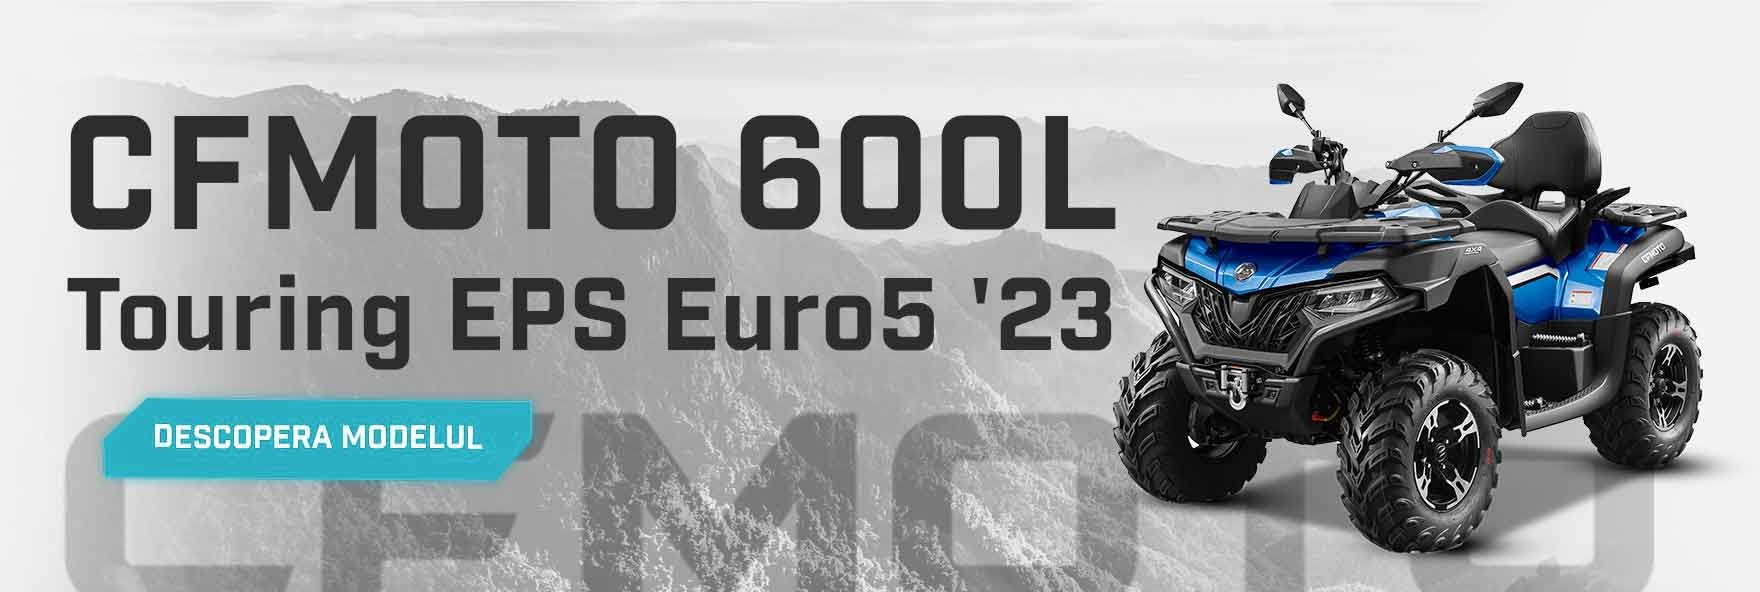 CFMOTO CFORCE 600L TOURING EPS Euro5 '23